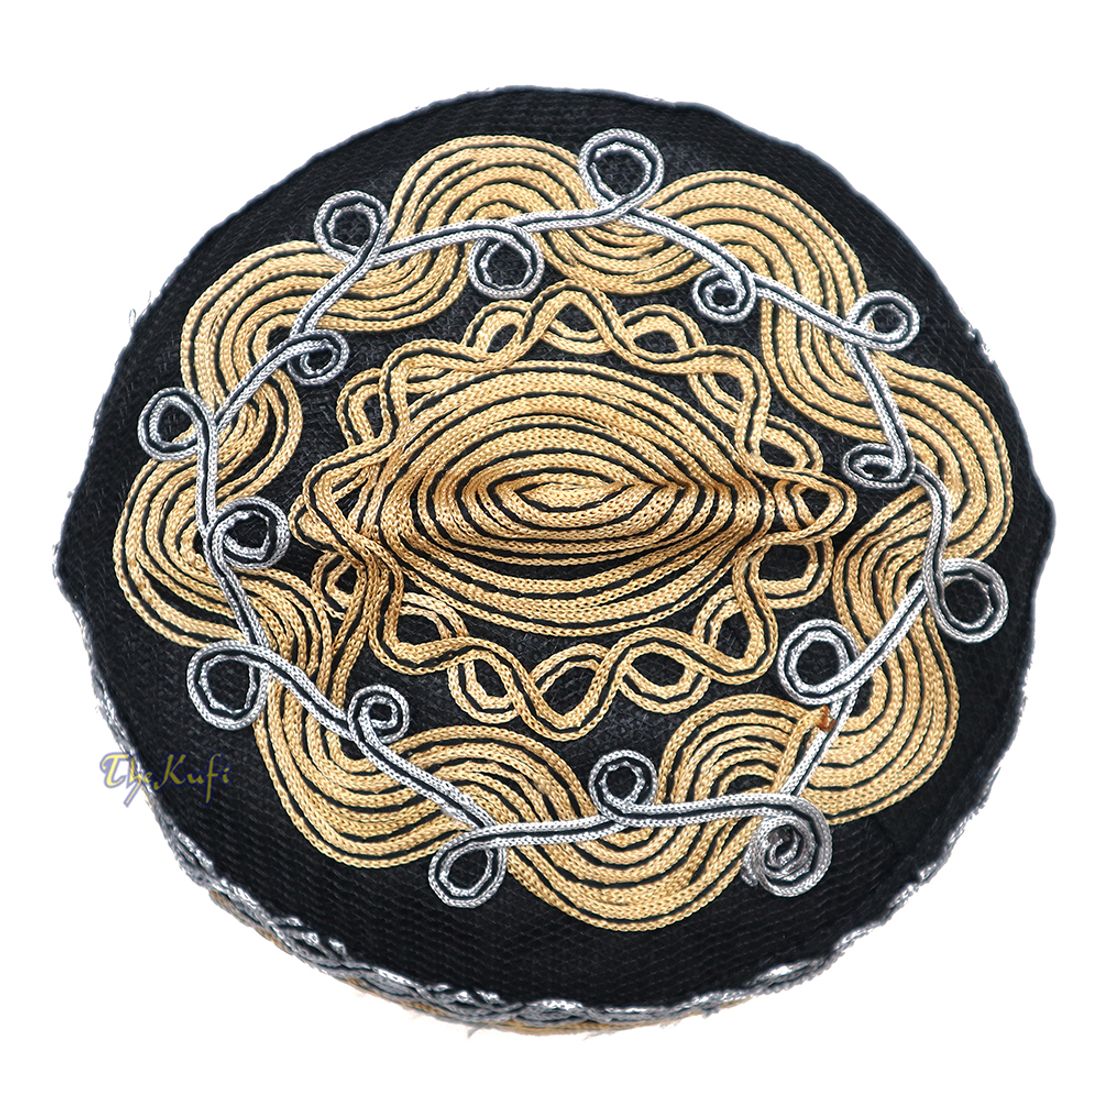 Handcrafted Black Golden Grey Macramé Netting Wave Design Muslim Prayer Hat